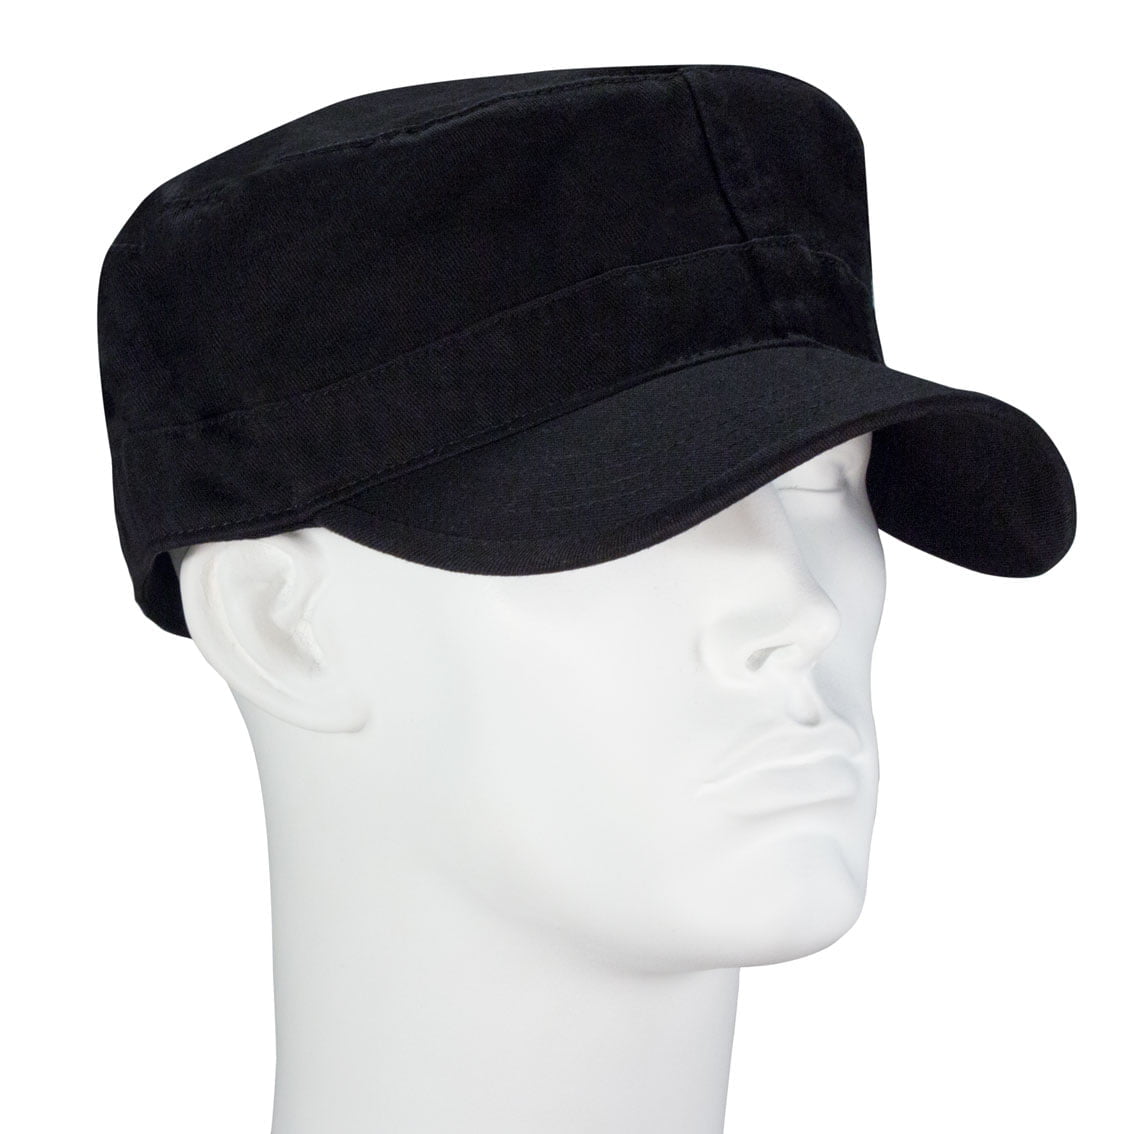 12pcs Black Plain Castro Military Fatigue Army Hats - Fitted - Unconstructed - 100% Cotton - Bulk by the Dozen - Wholesale